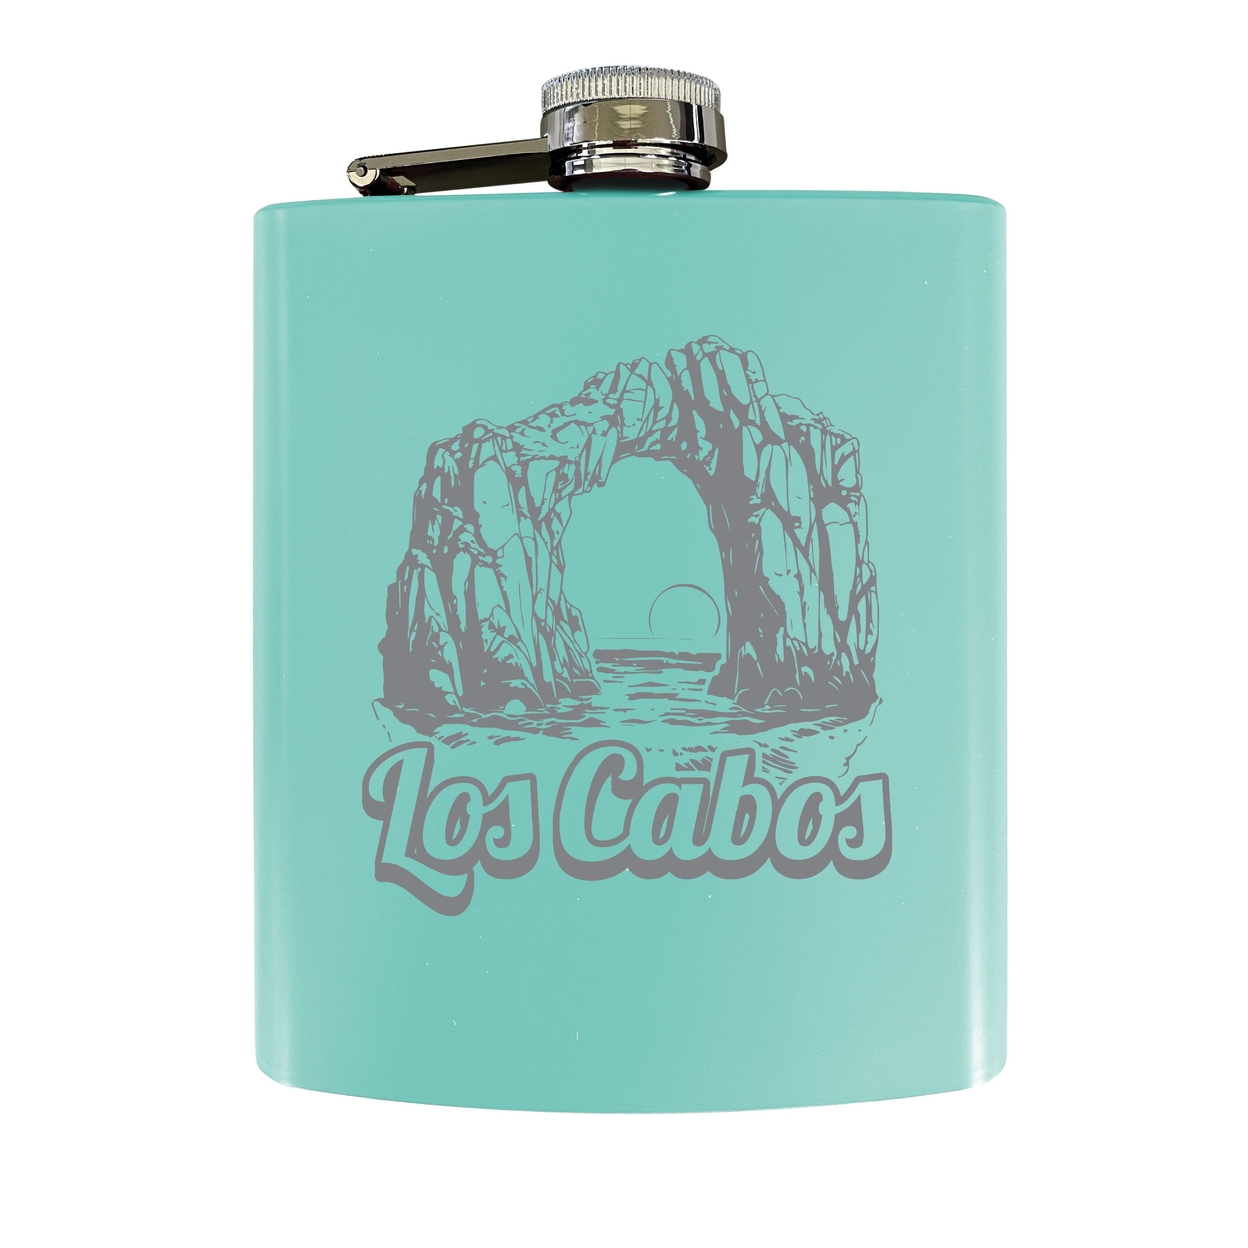 Los Cabos Mexico Souvenir 7 Oz Engraved Steel Flask Matte Finish - Black,,4-Pack